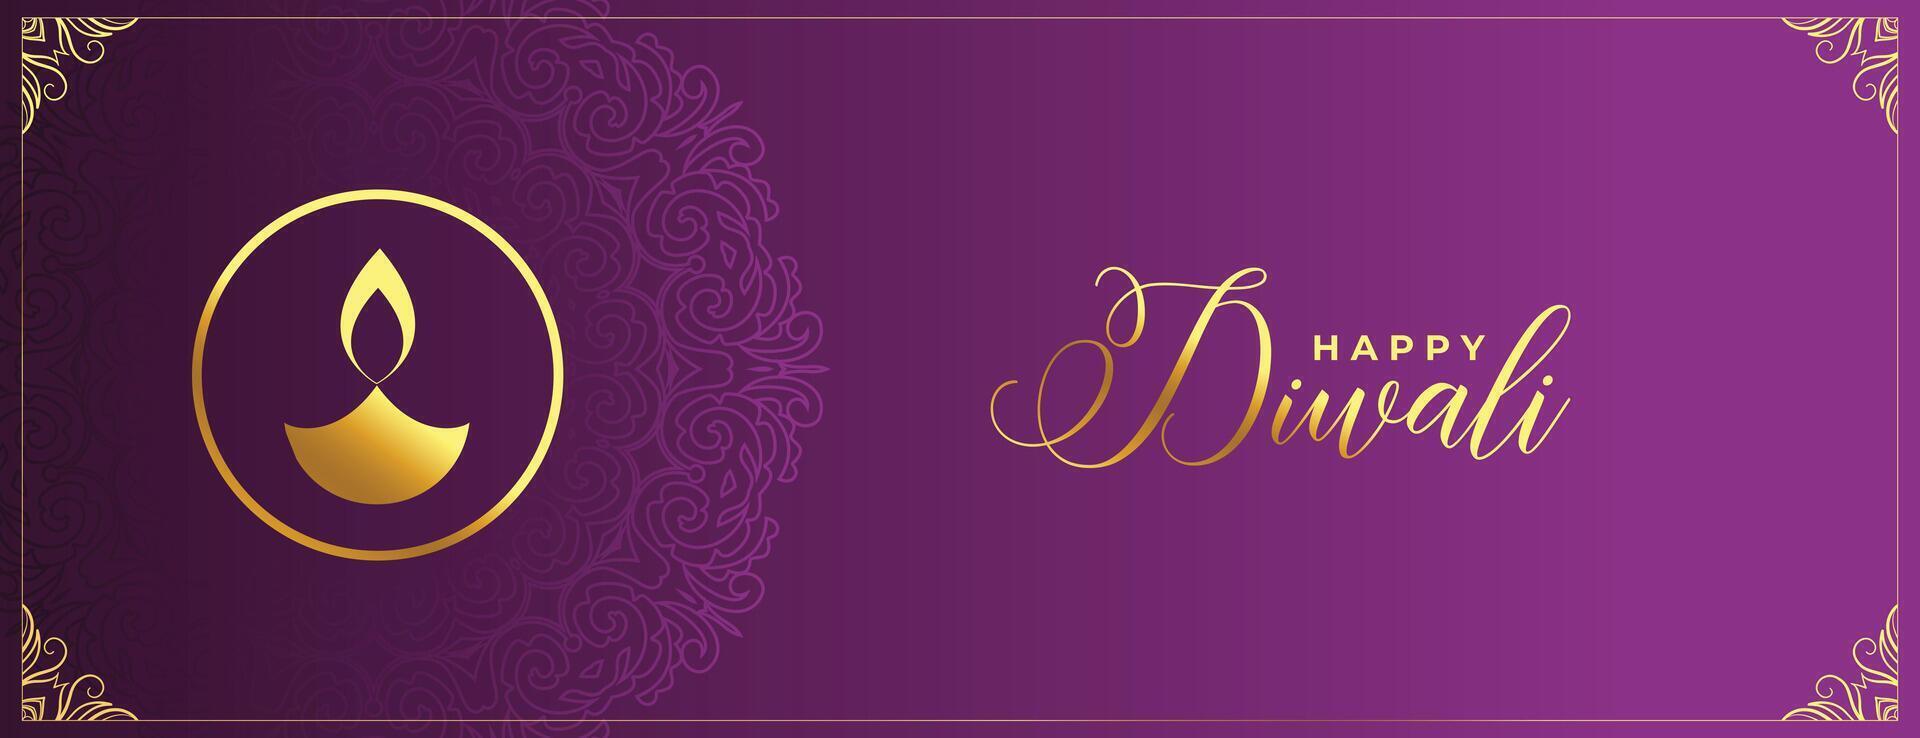 royal happy diwali occasion banner with golden ethnic diya design vector